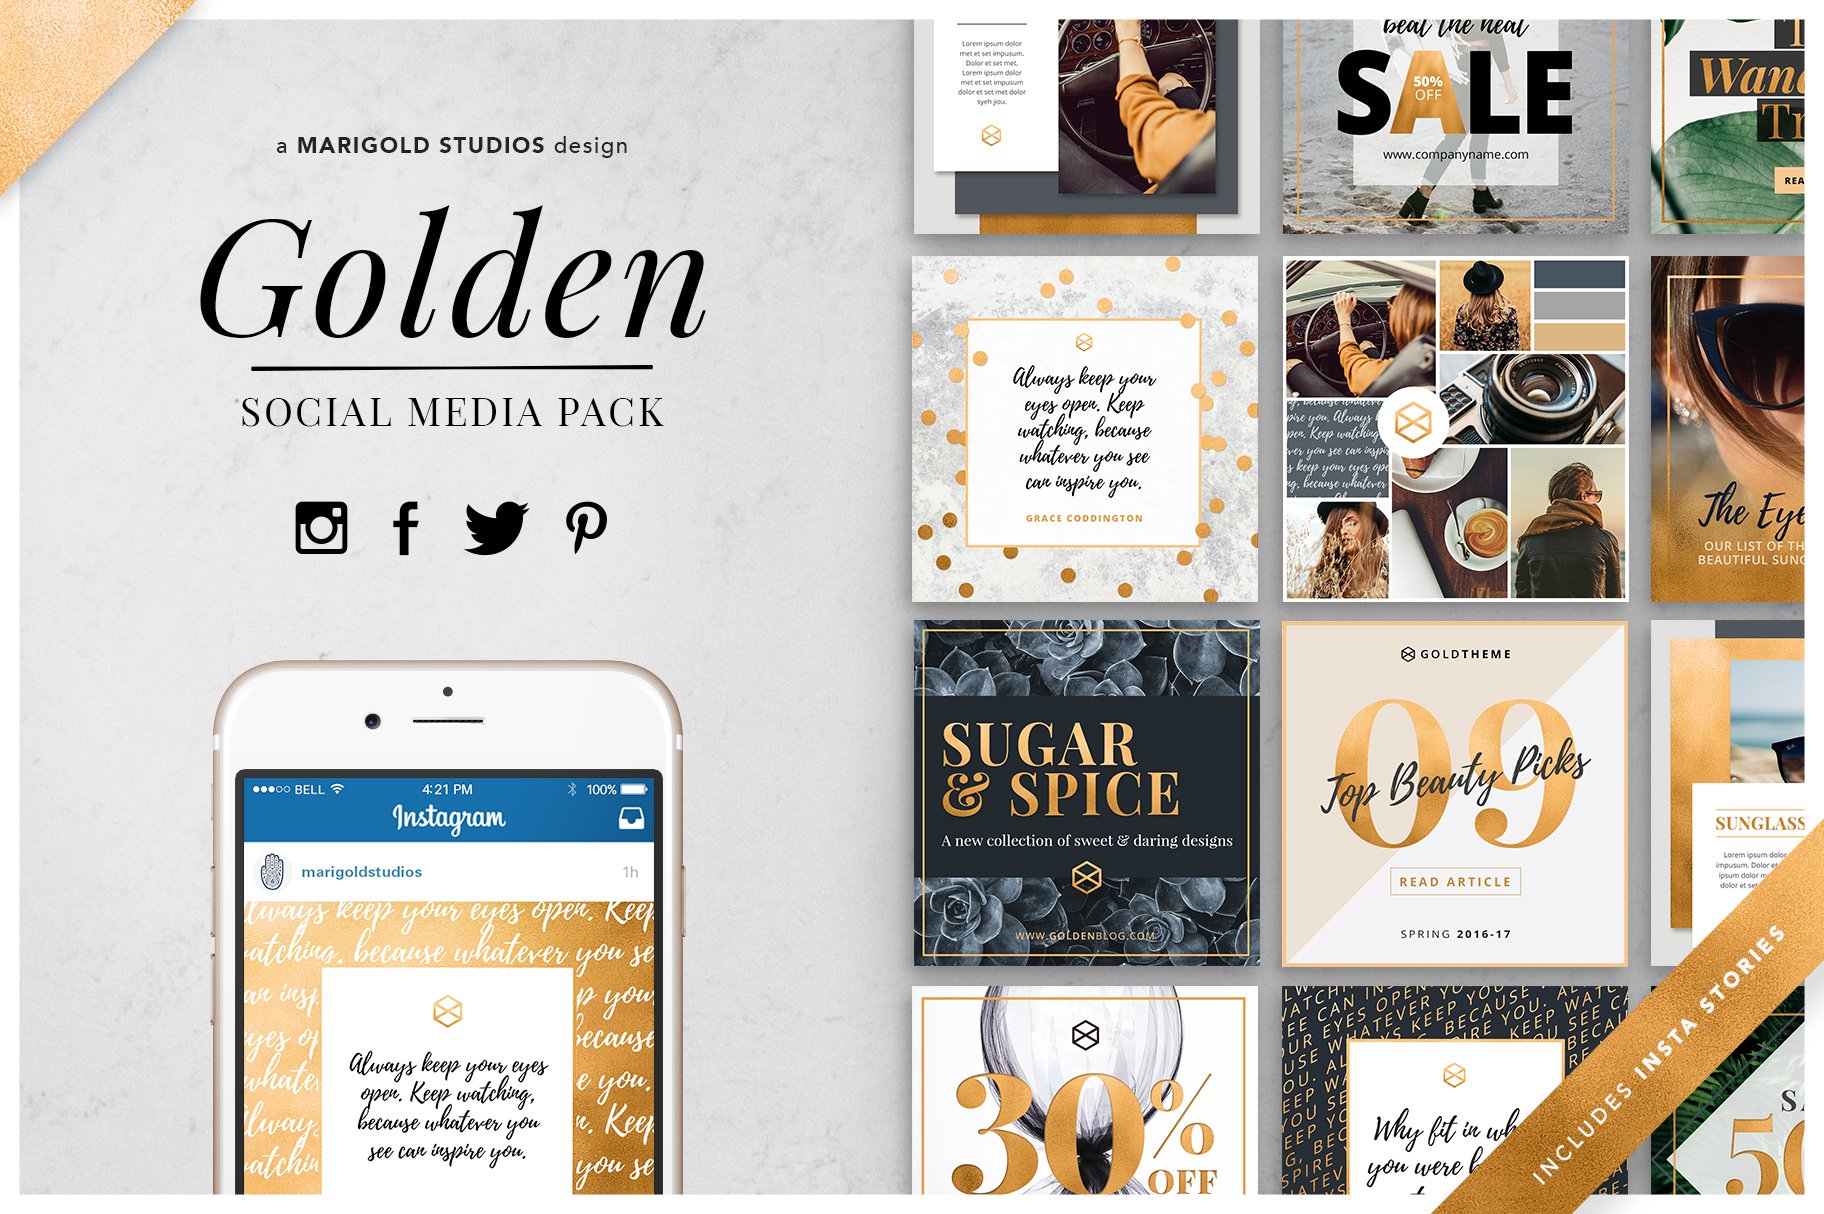 GOLDEN | Social Media Pack preview image.